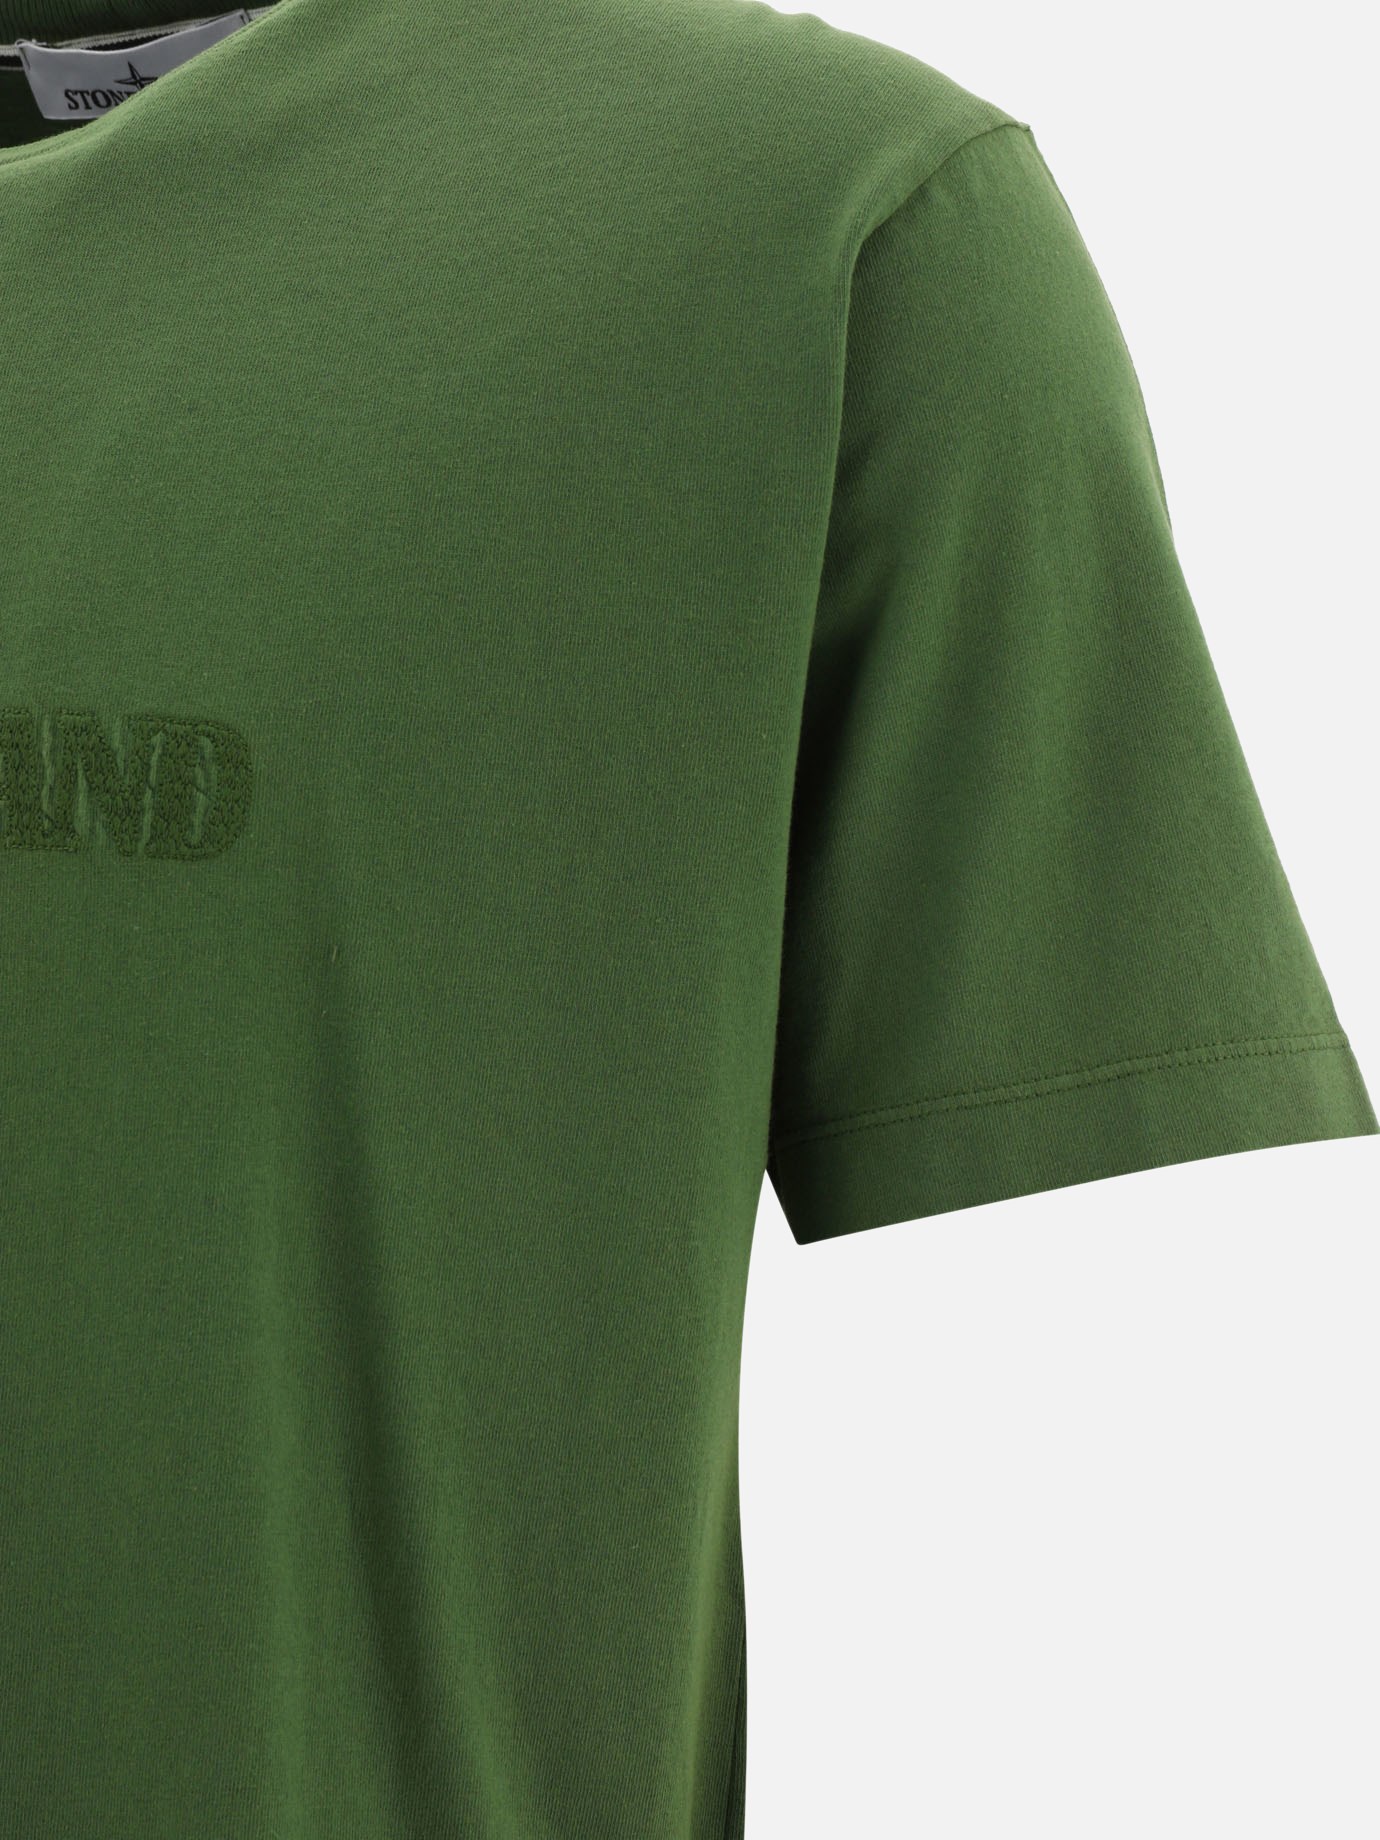 T-shirt con ricamo by Stone Island